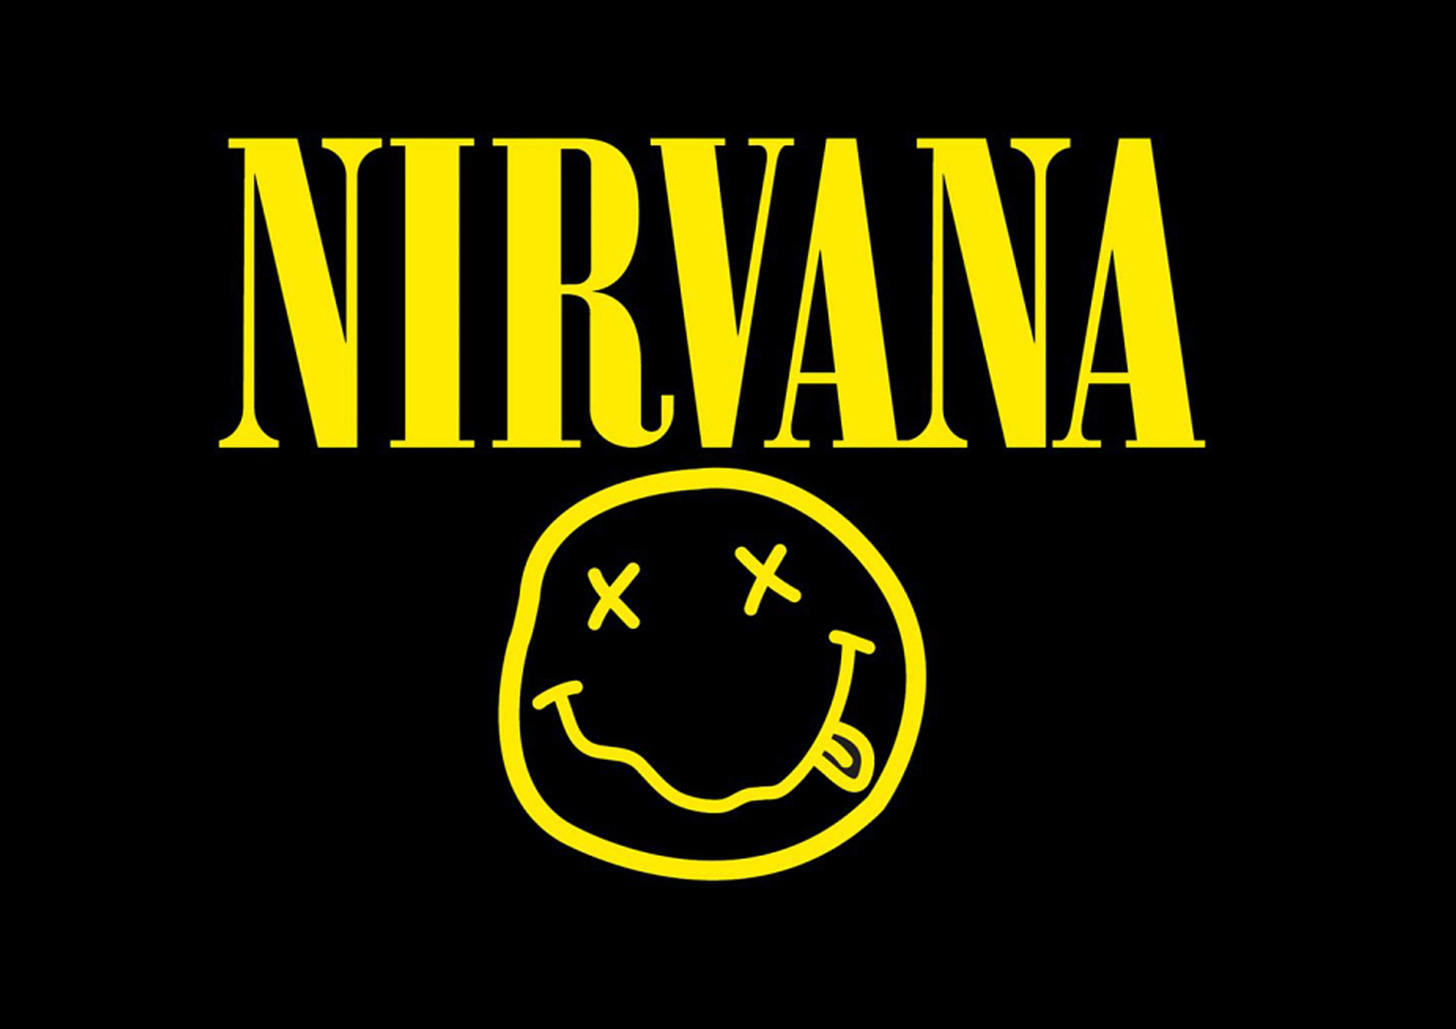 Nirvana logo with smiley face